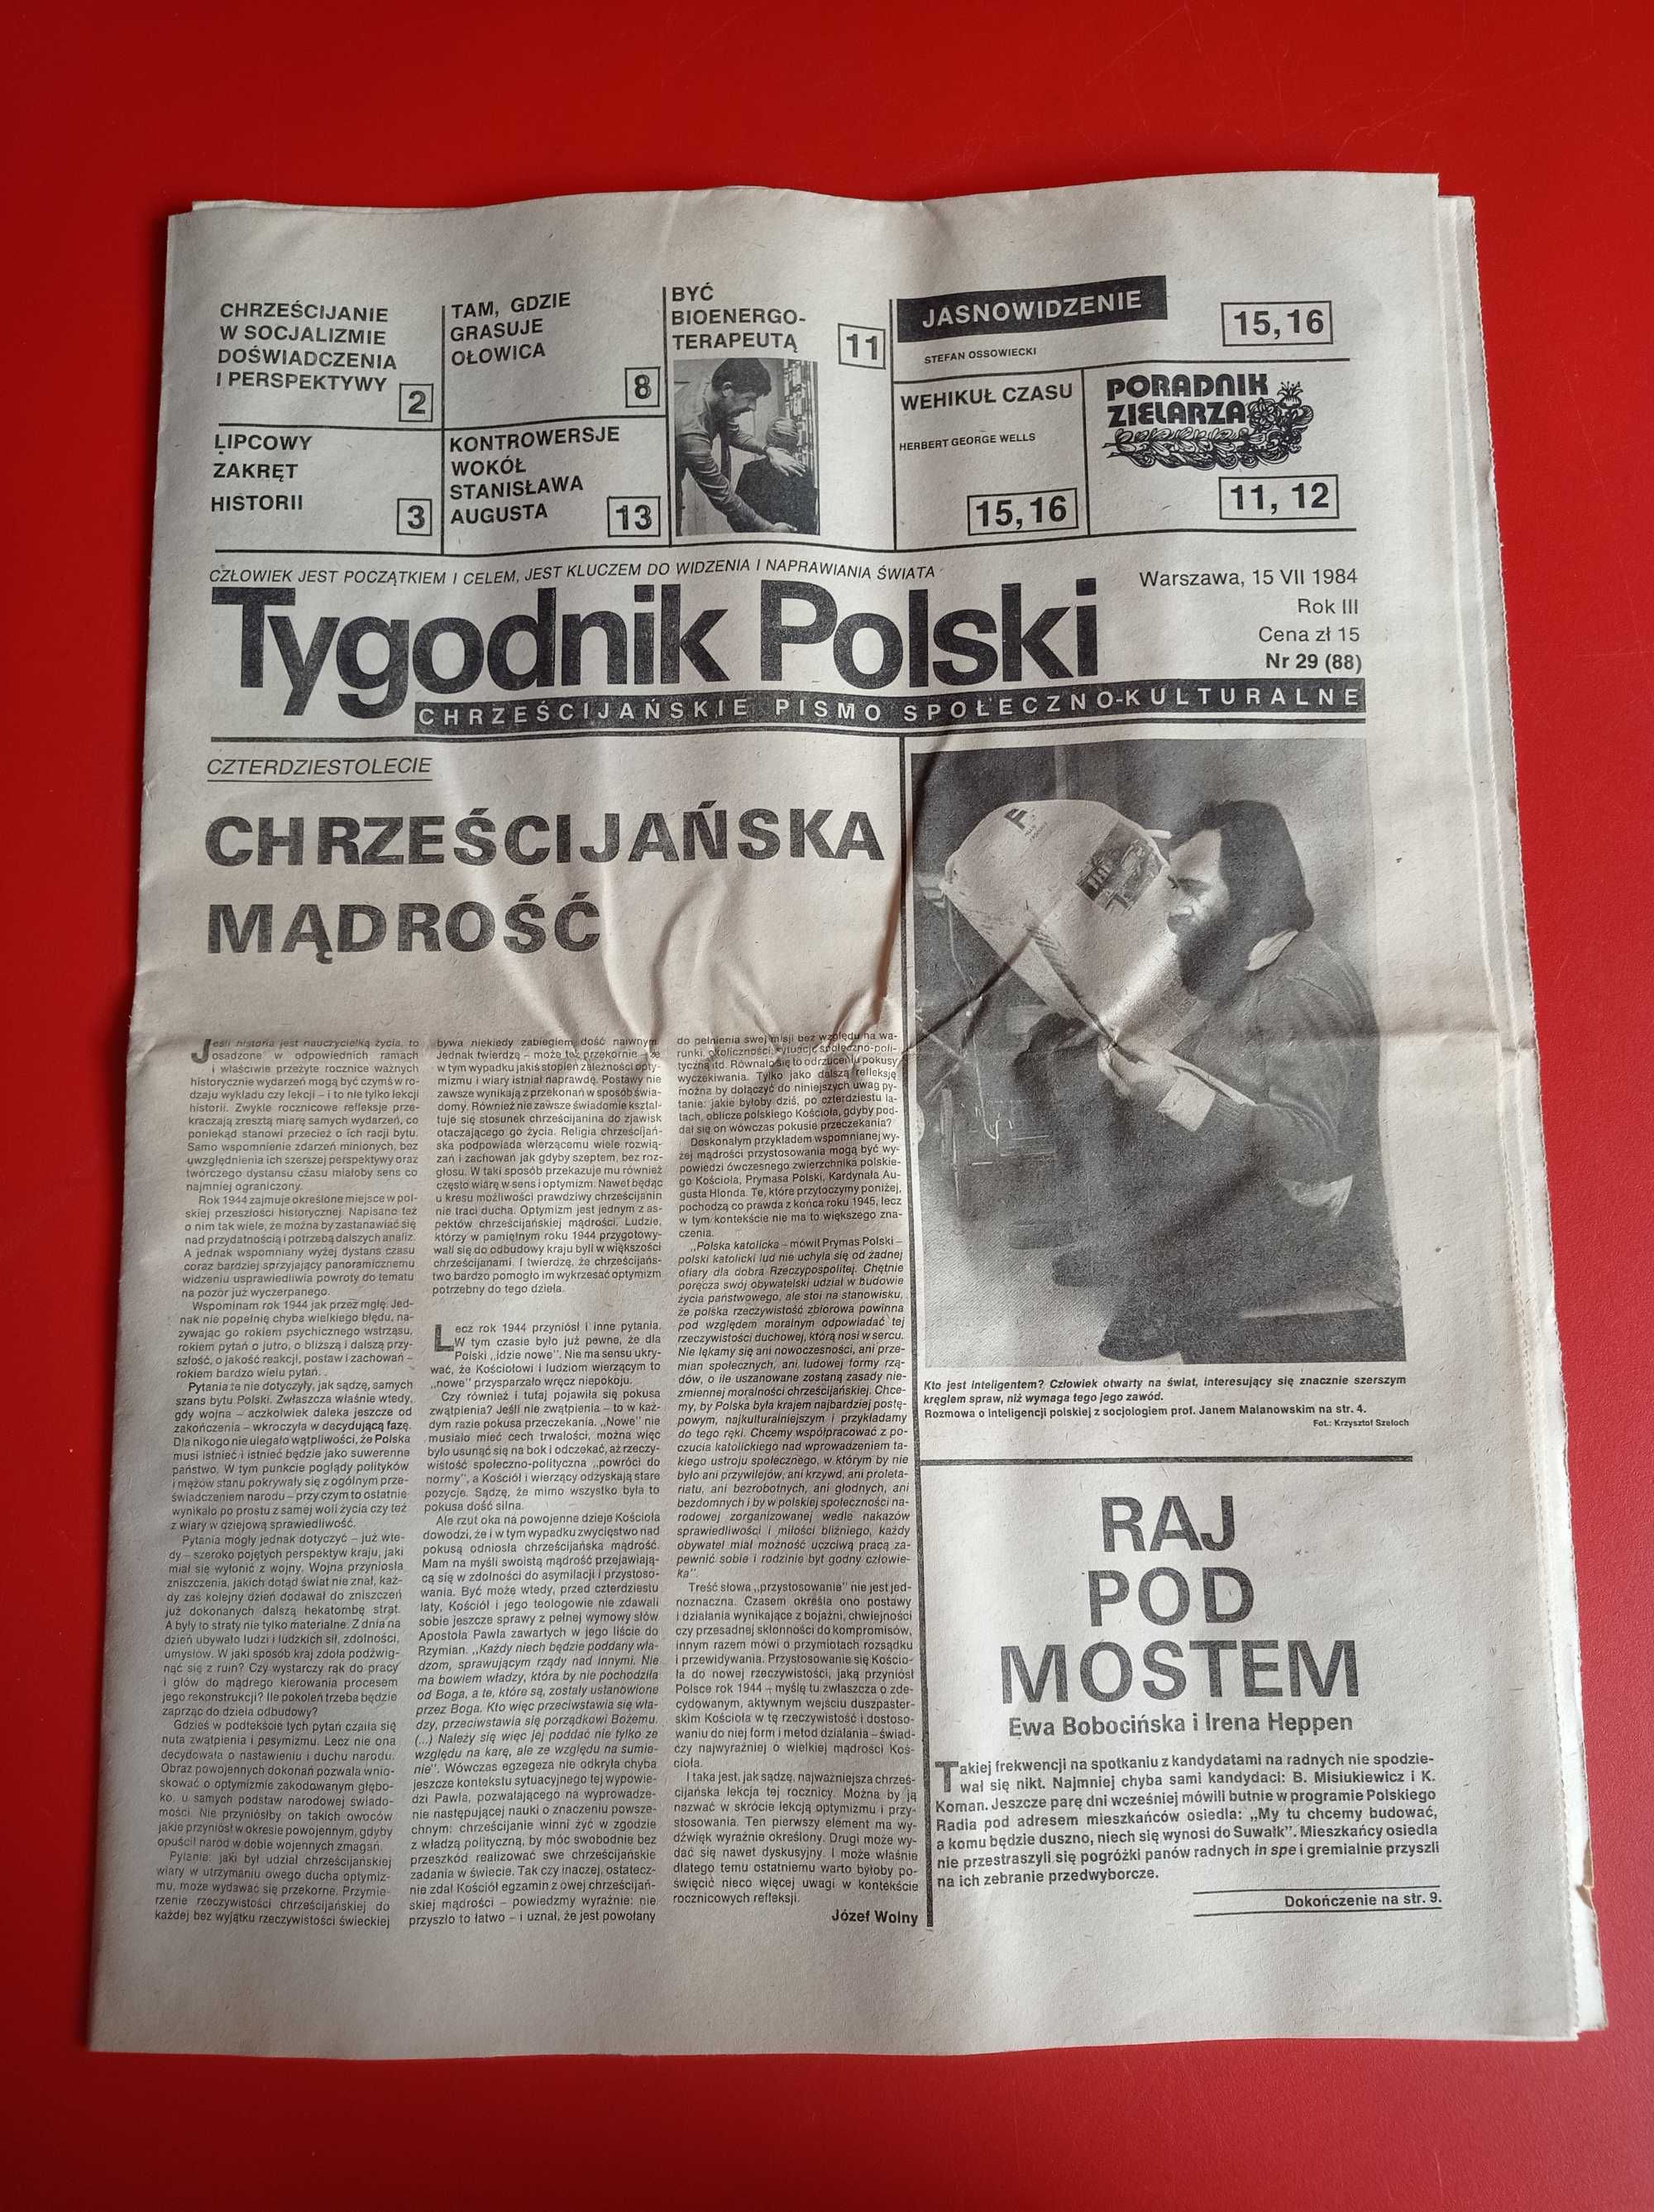 Tygodnik Polski, nr 29/1984, 15 lipca 1984